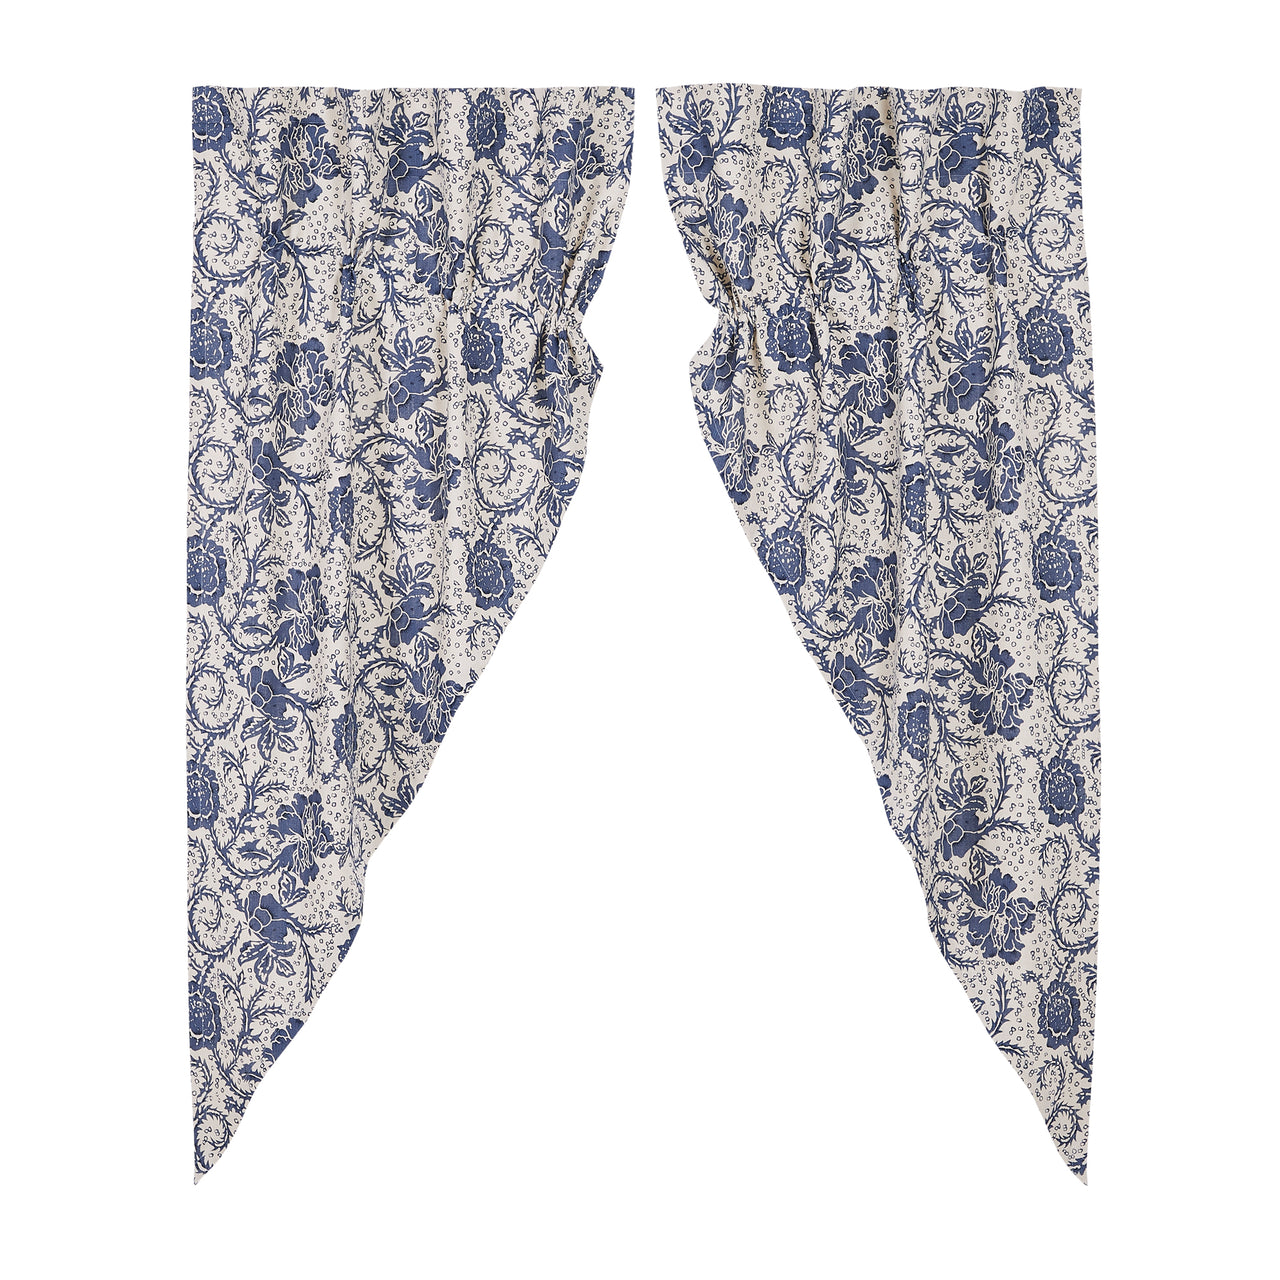 Dorset Navy Floral Prairie Short Panel Curtain Set of 2 63x36x18 VHC Brands